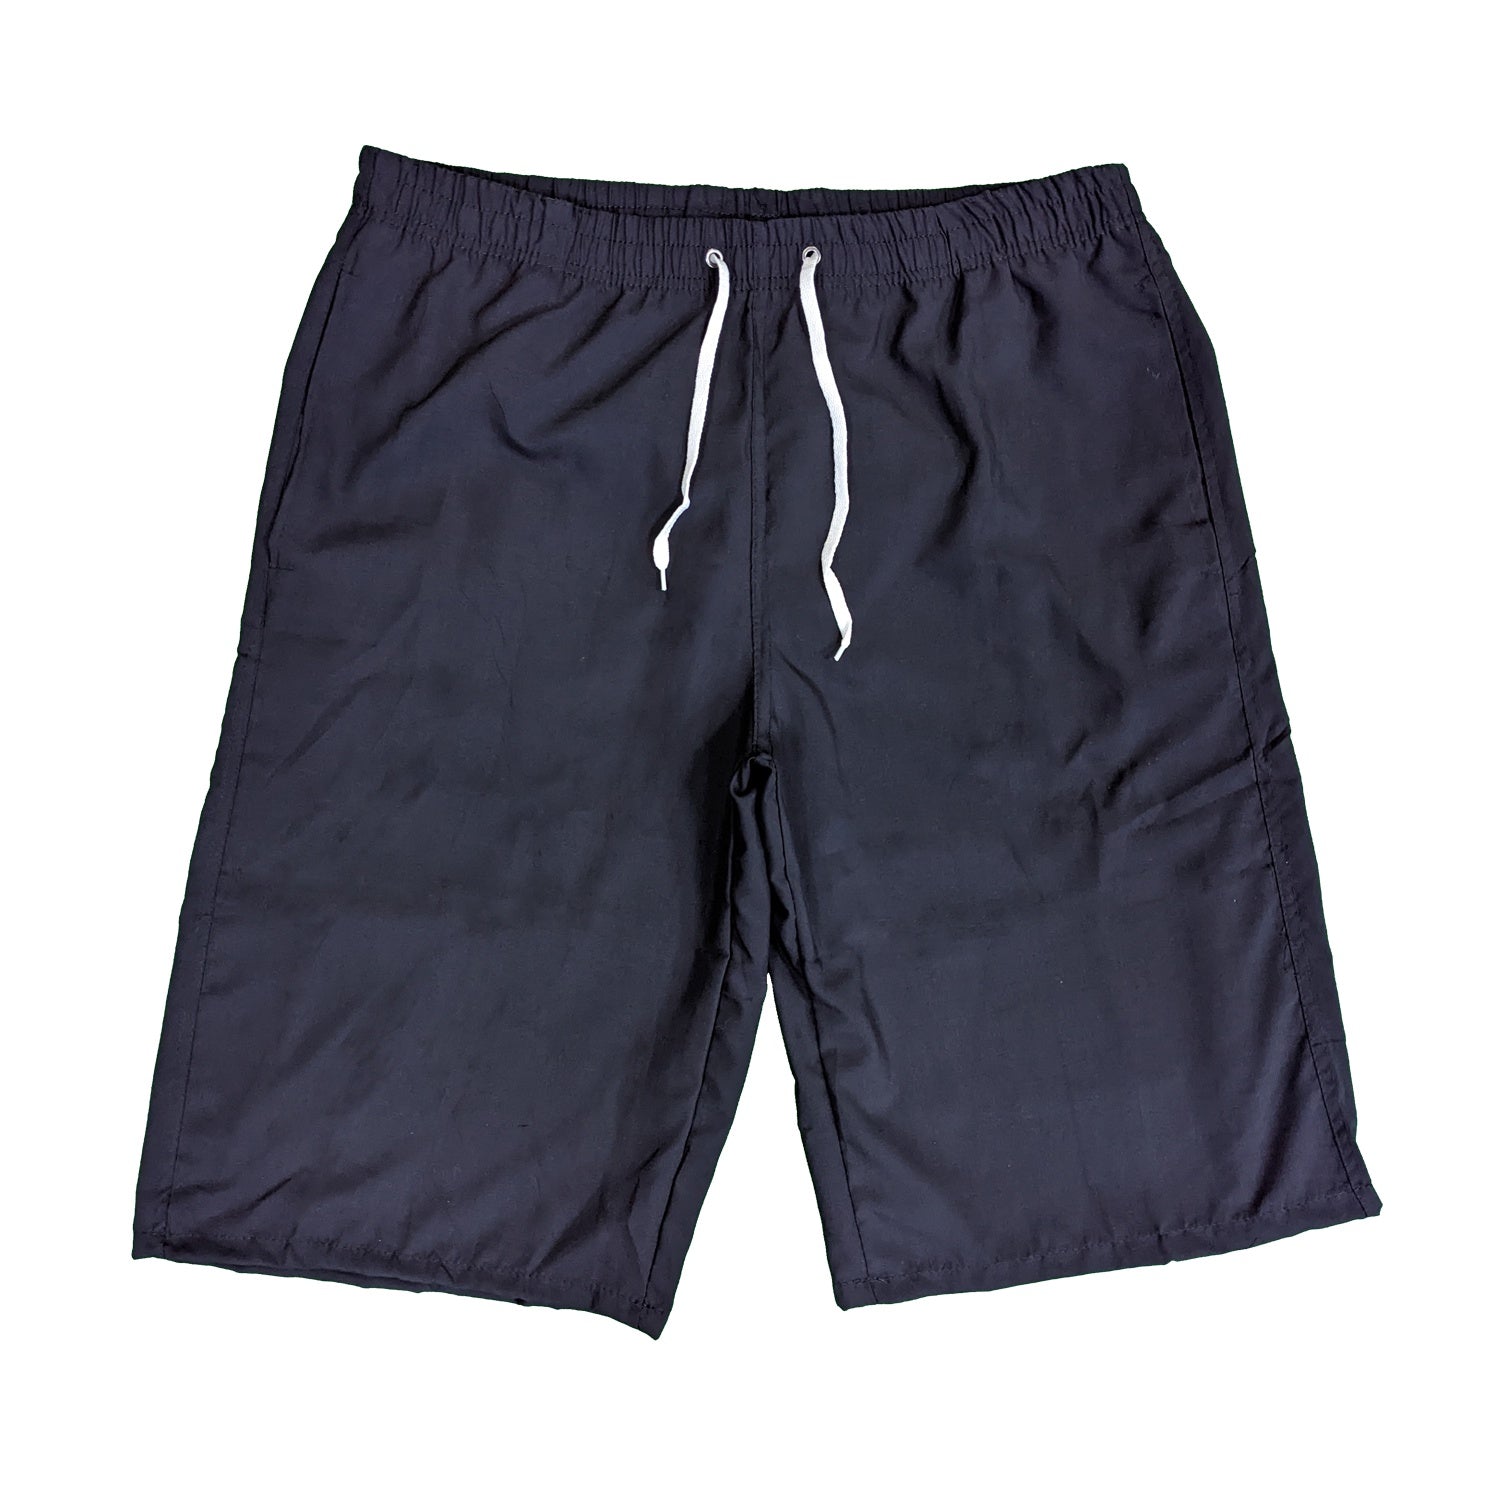 Fitzgerld Swim Shorts - Black 1